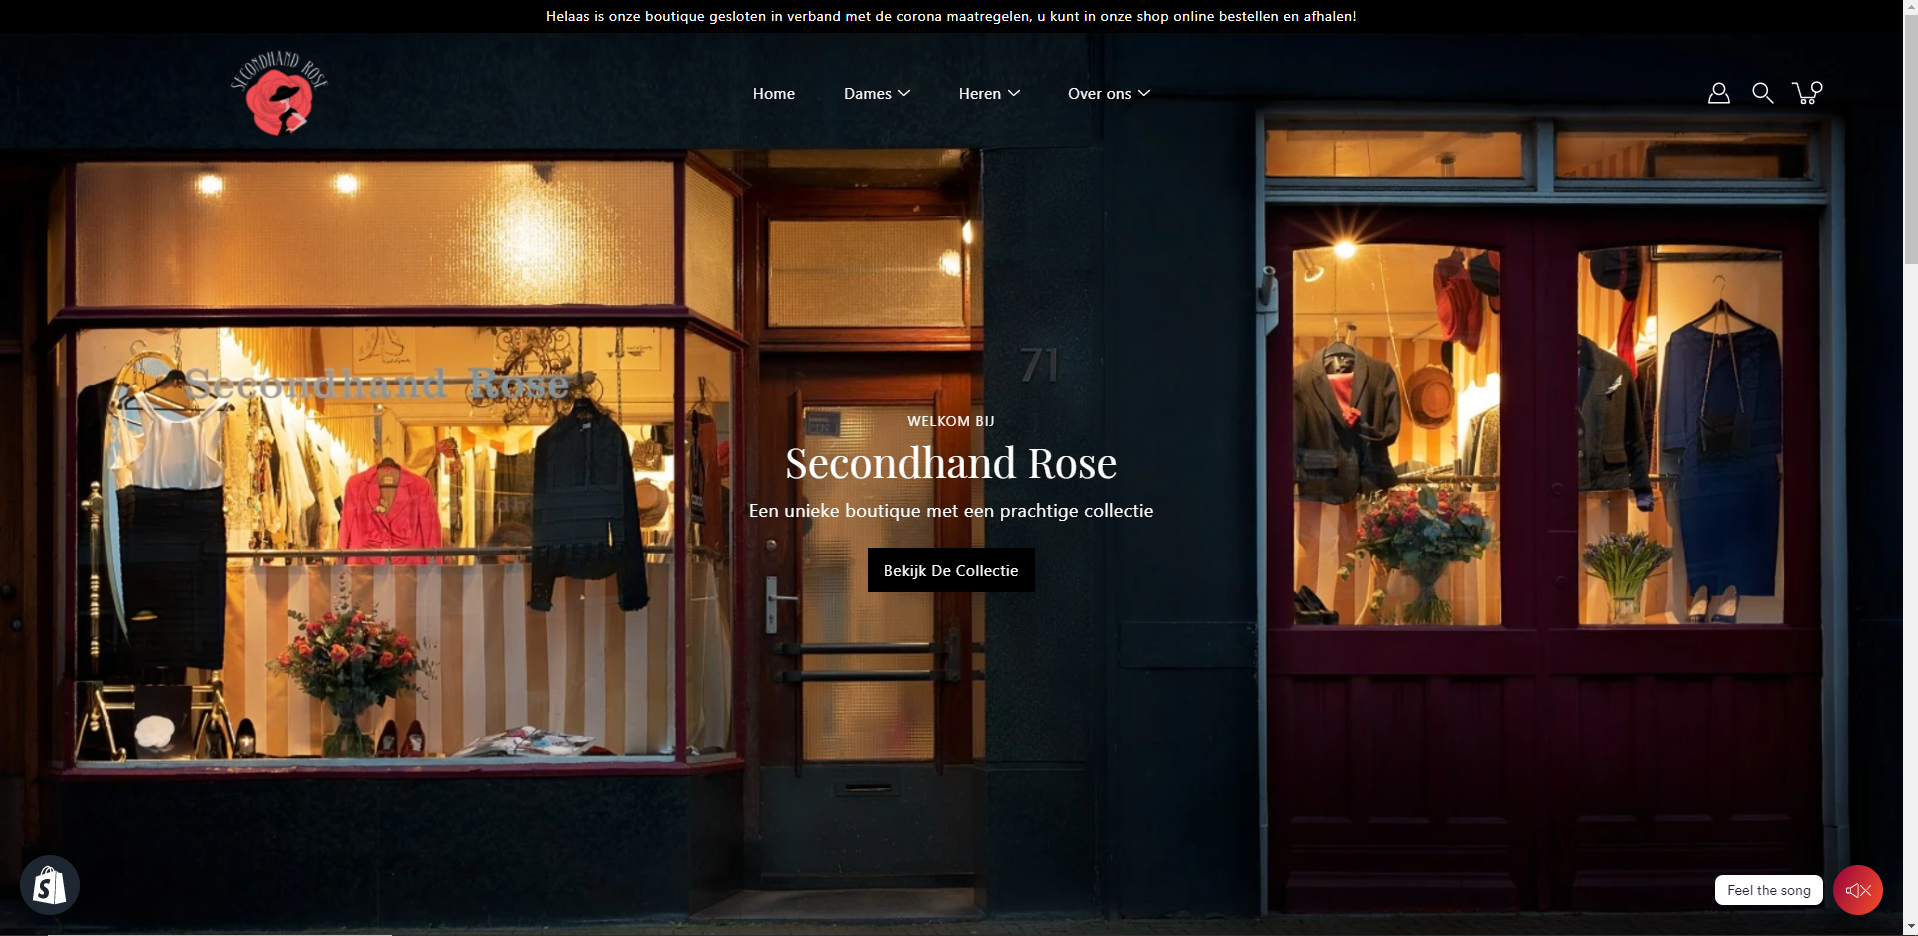 Secondhand Rose webshop is live